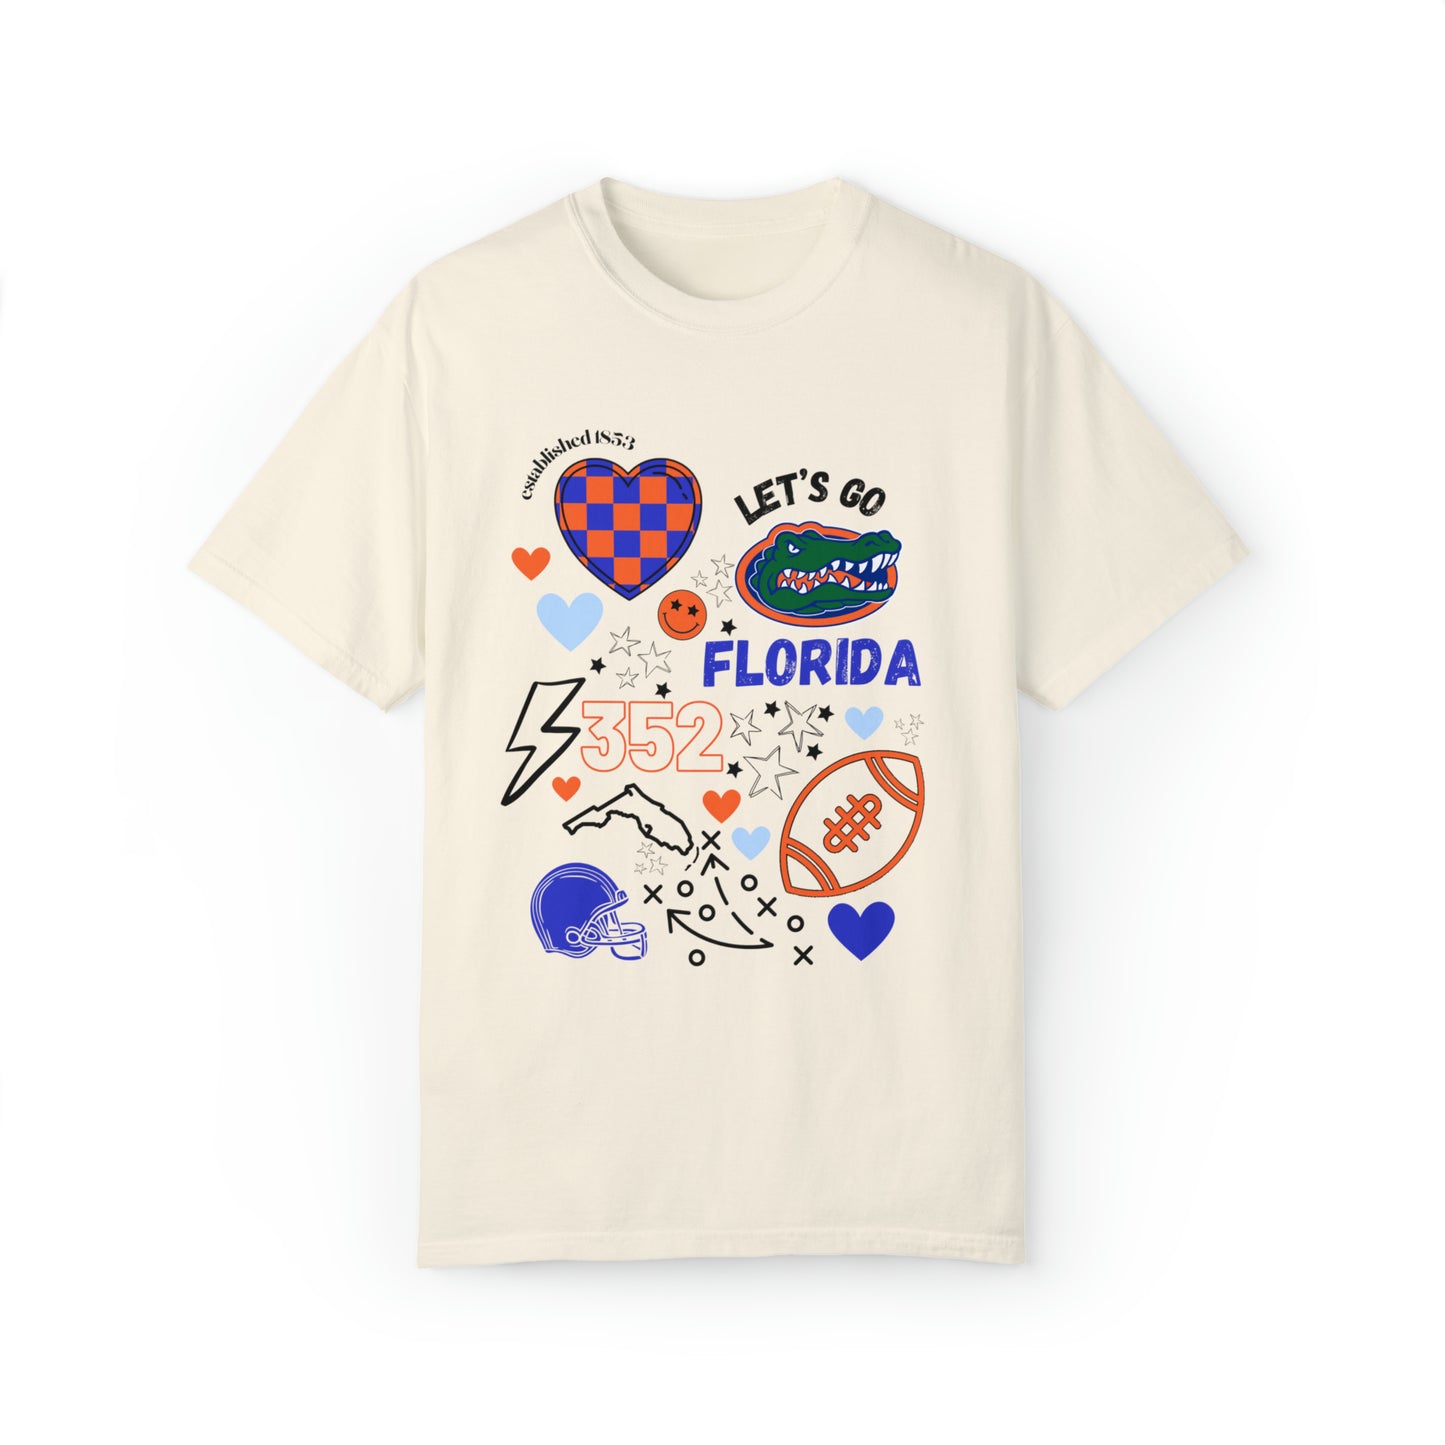 FL Gators Game Day Shirt